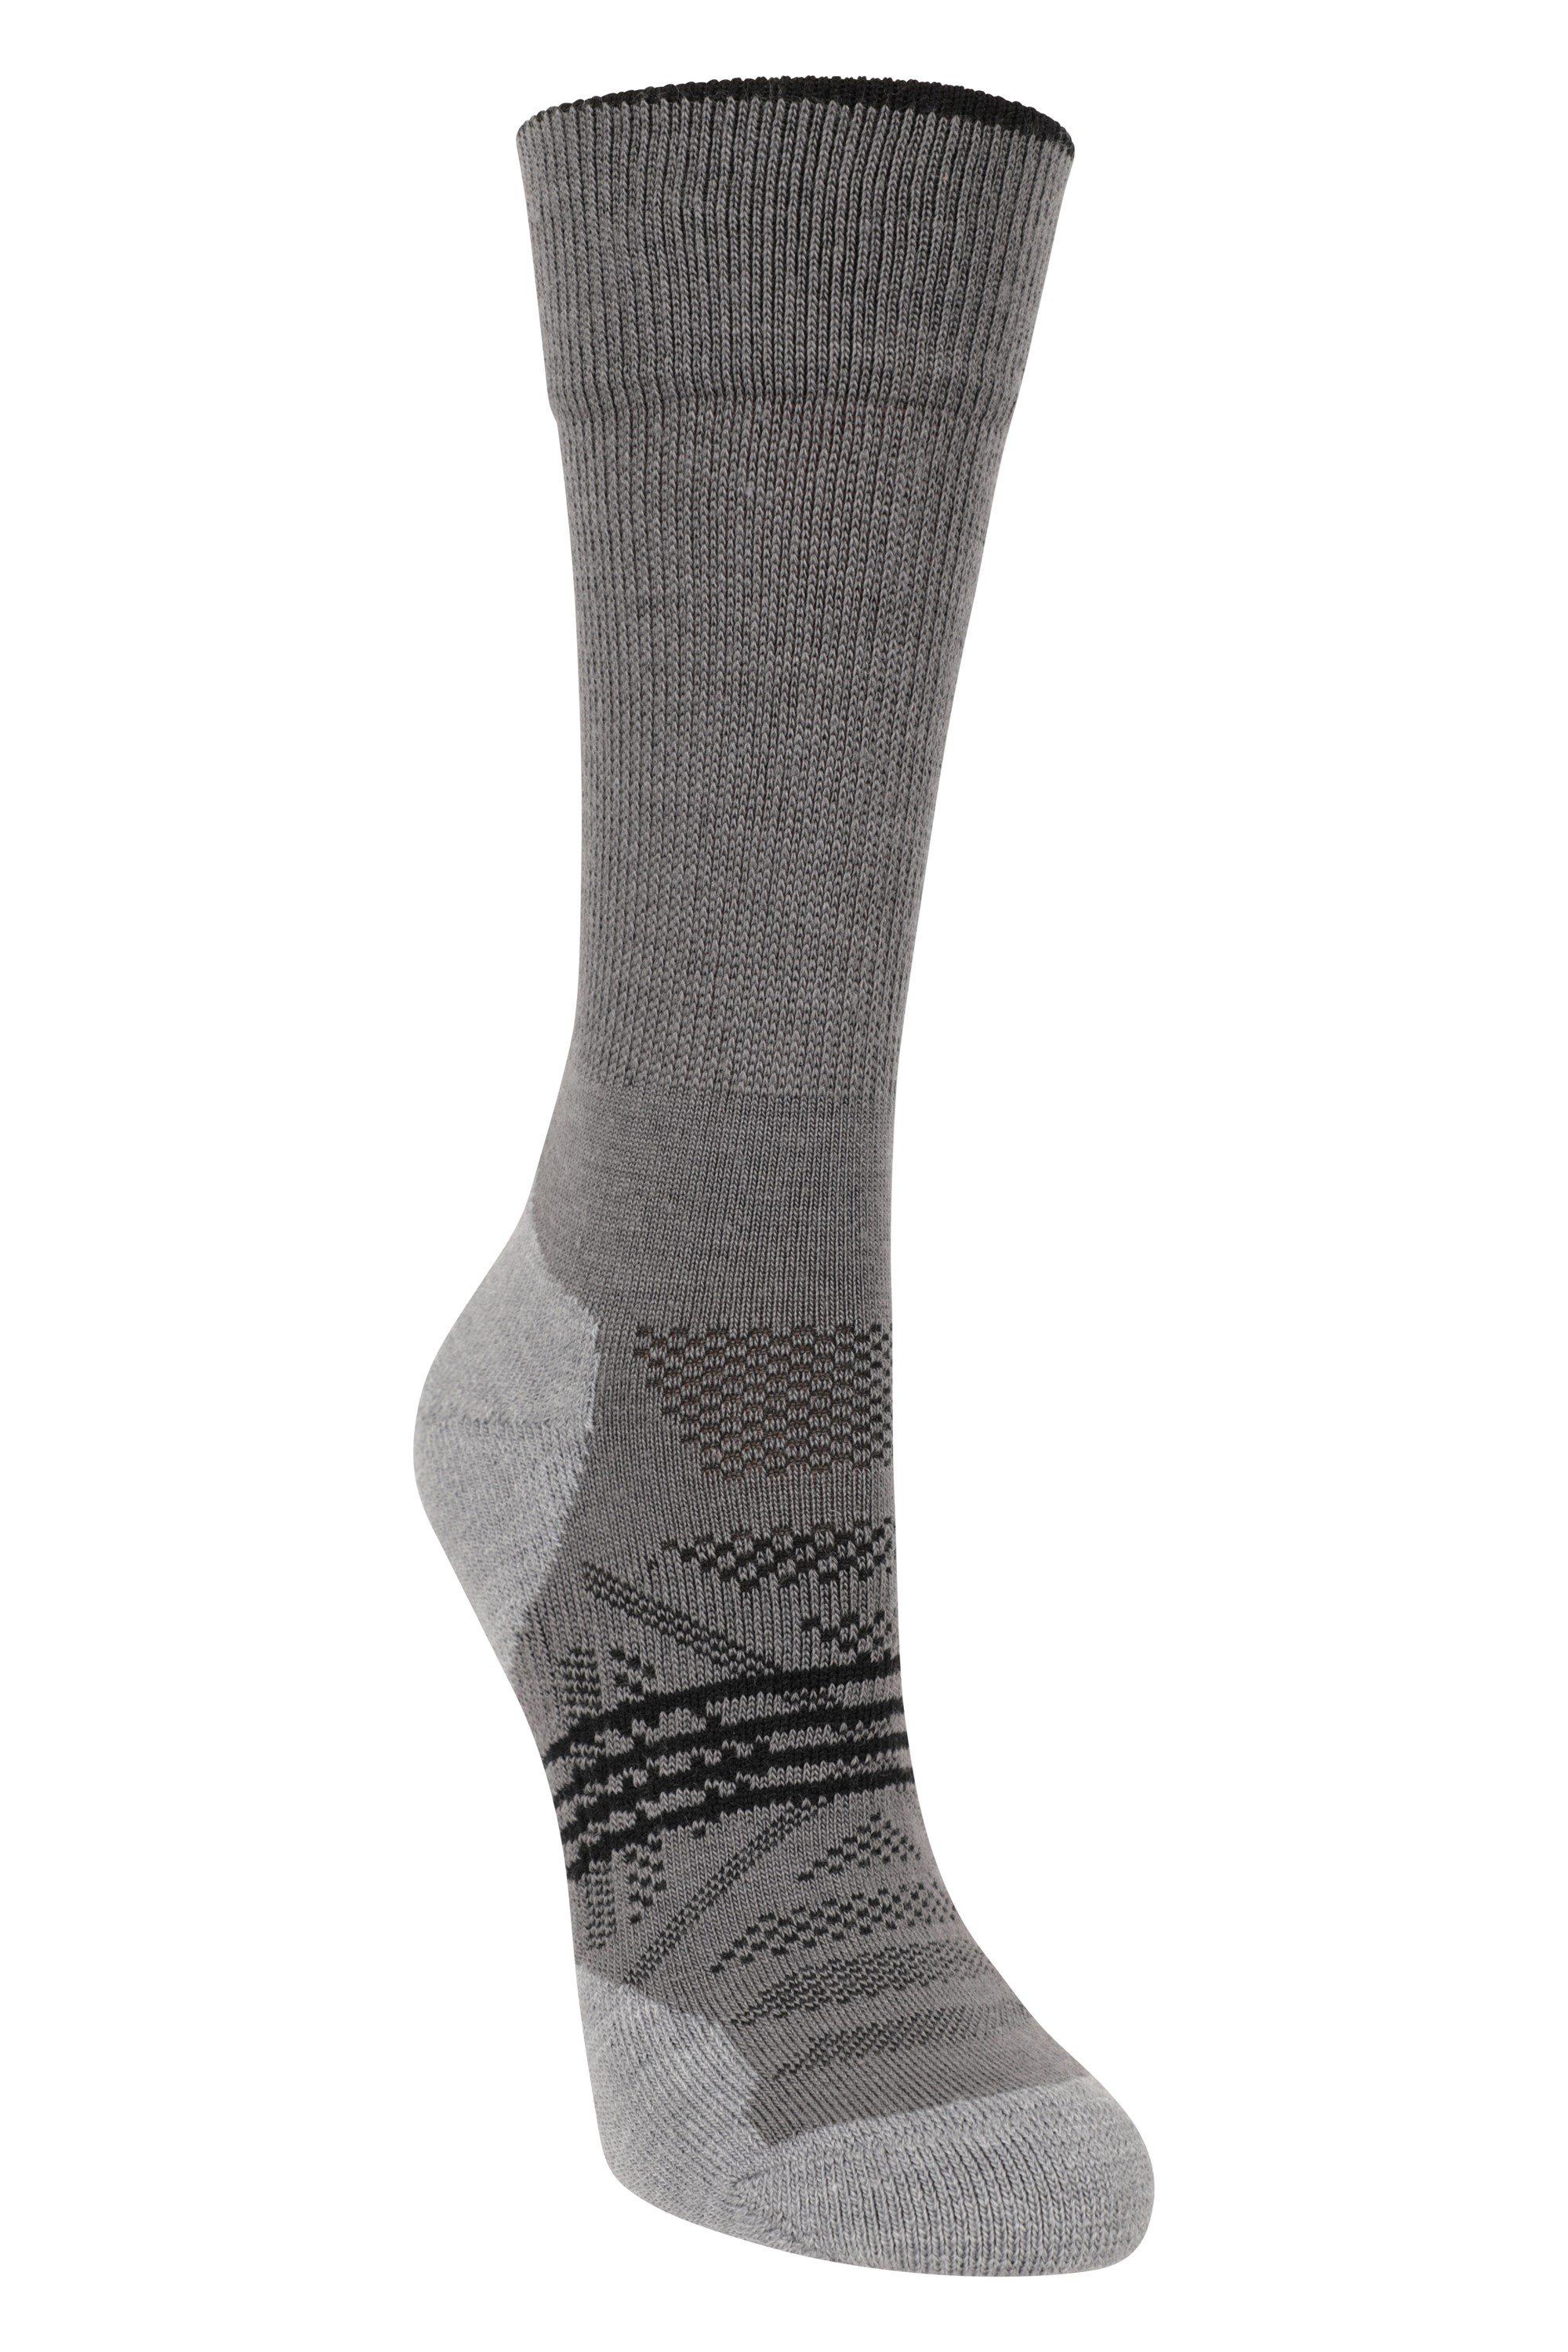 Merino Wool Mid Calf Socks  Lightweight Warm